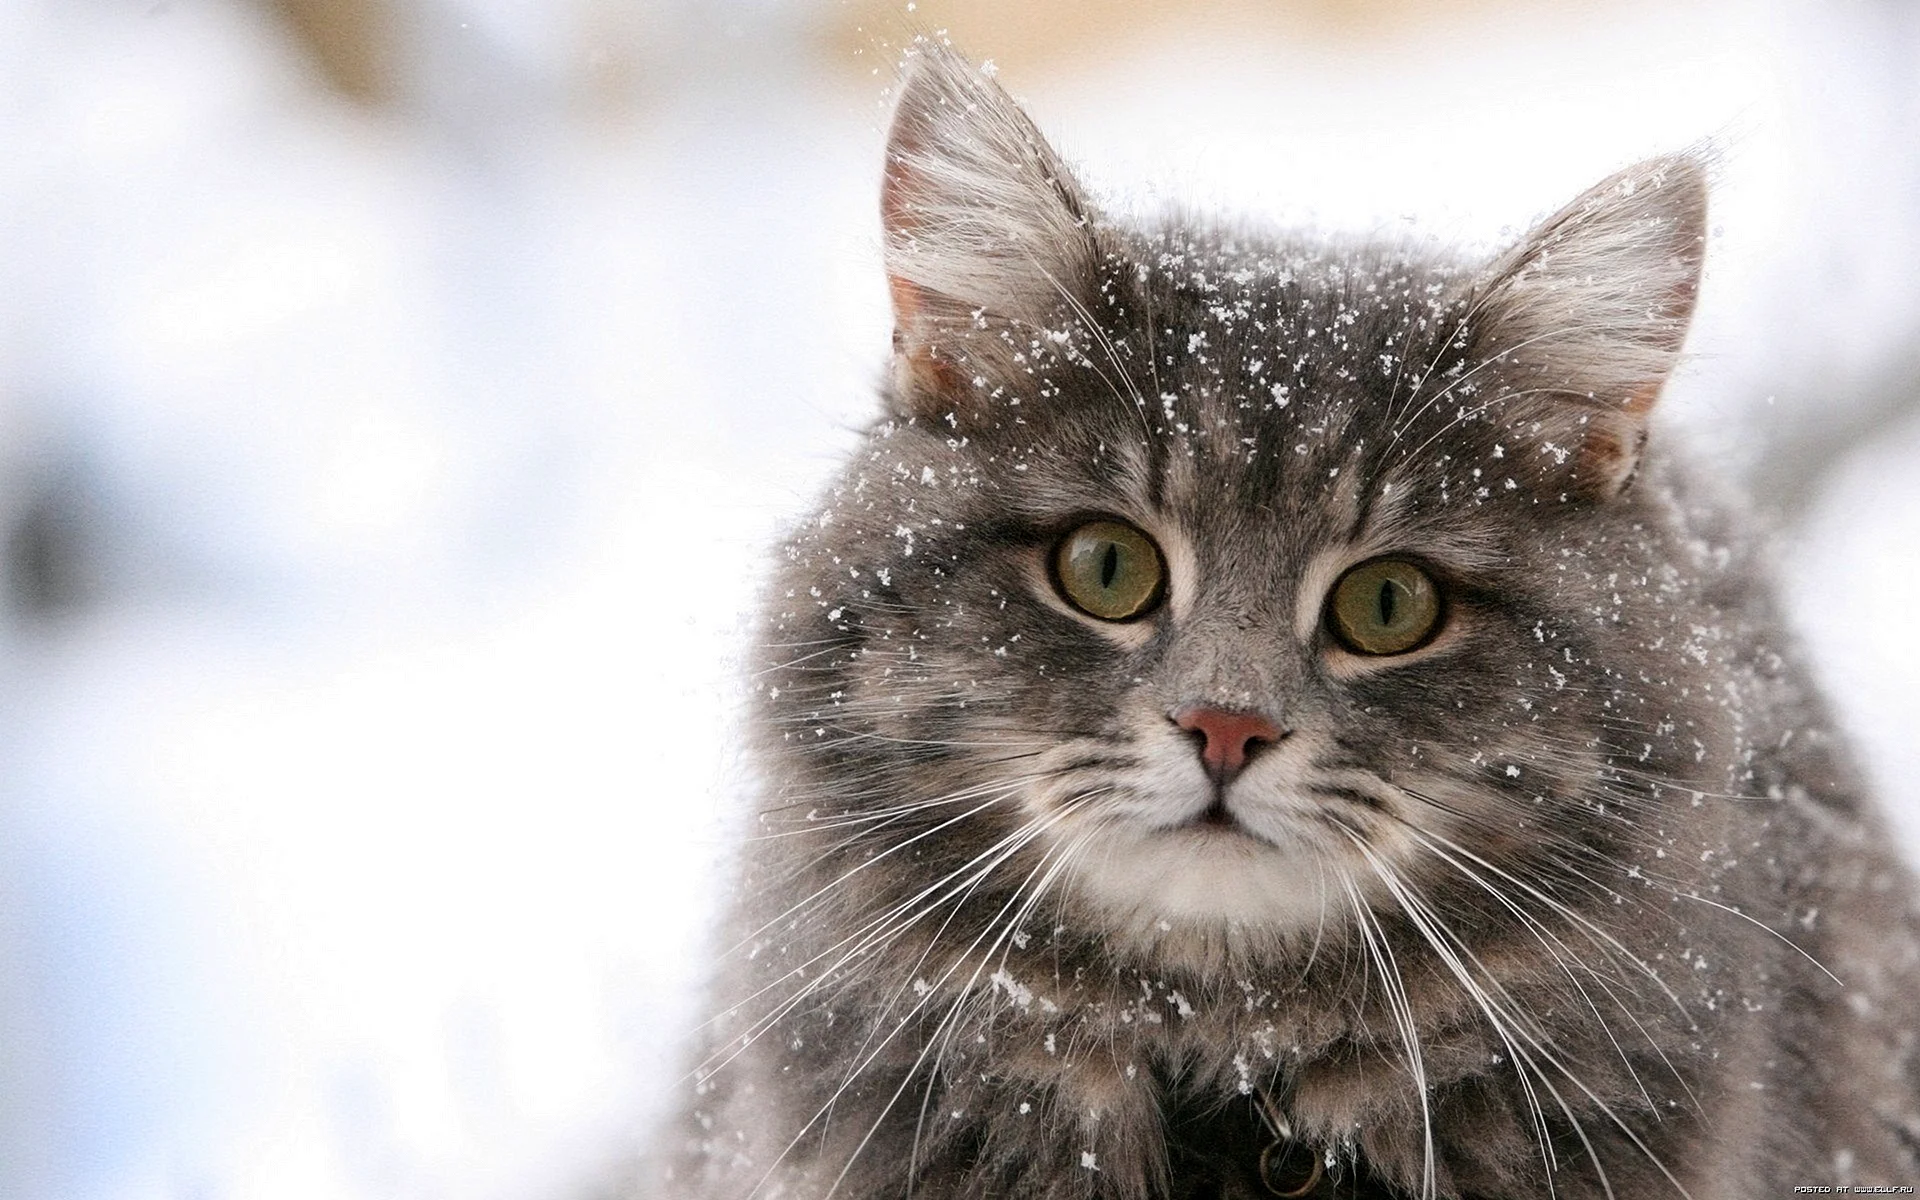 Cat in the Snow Wallpaper